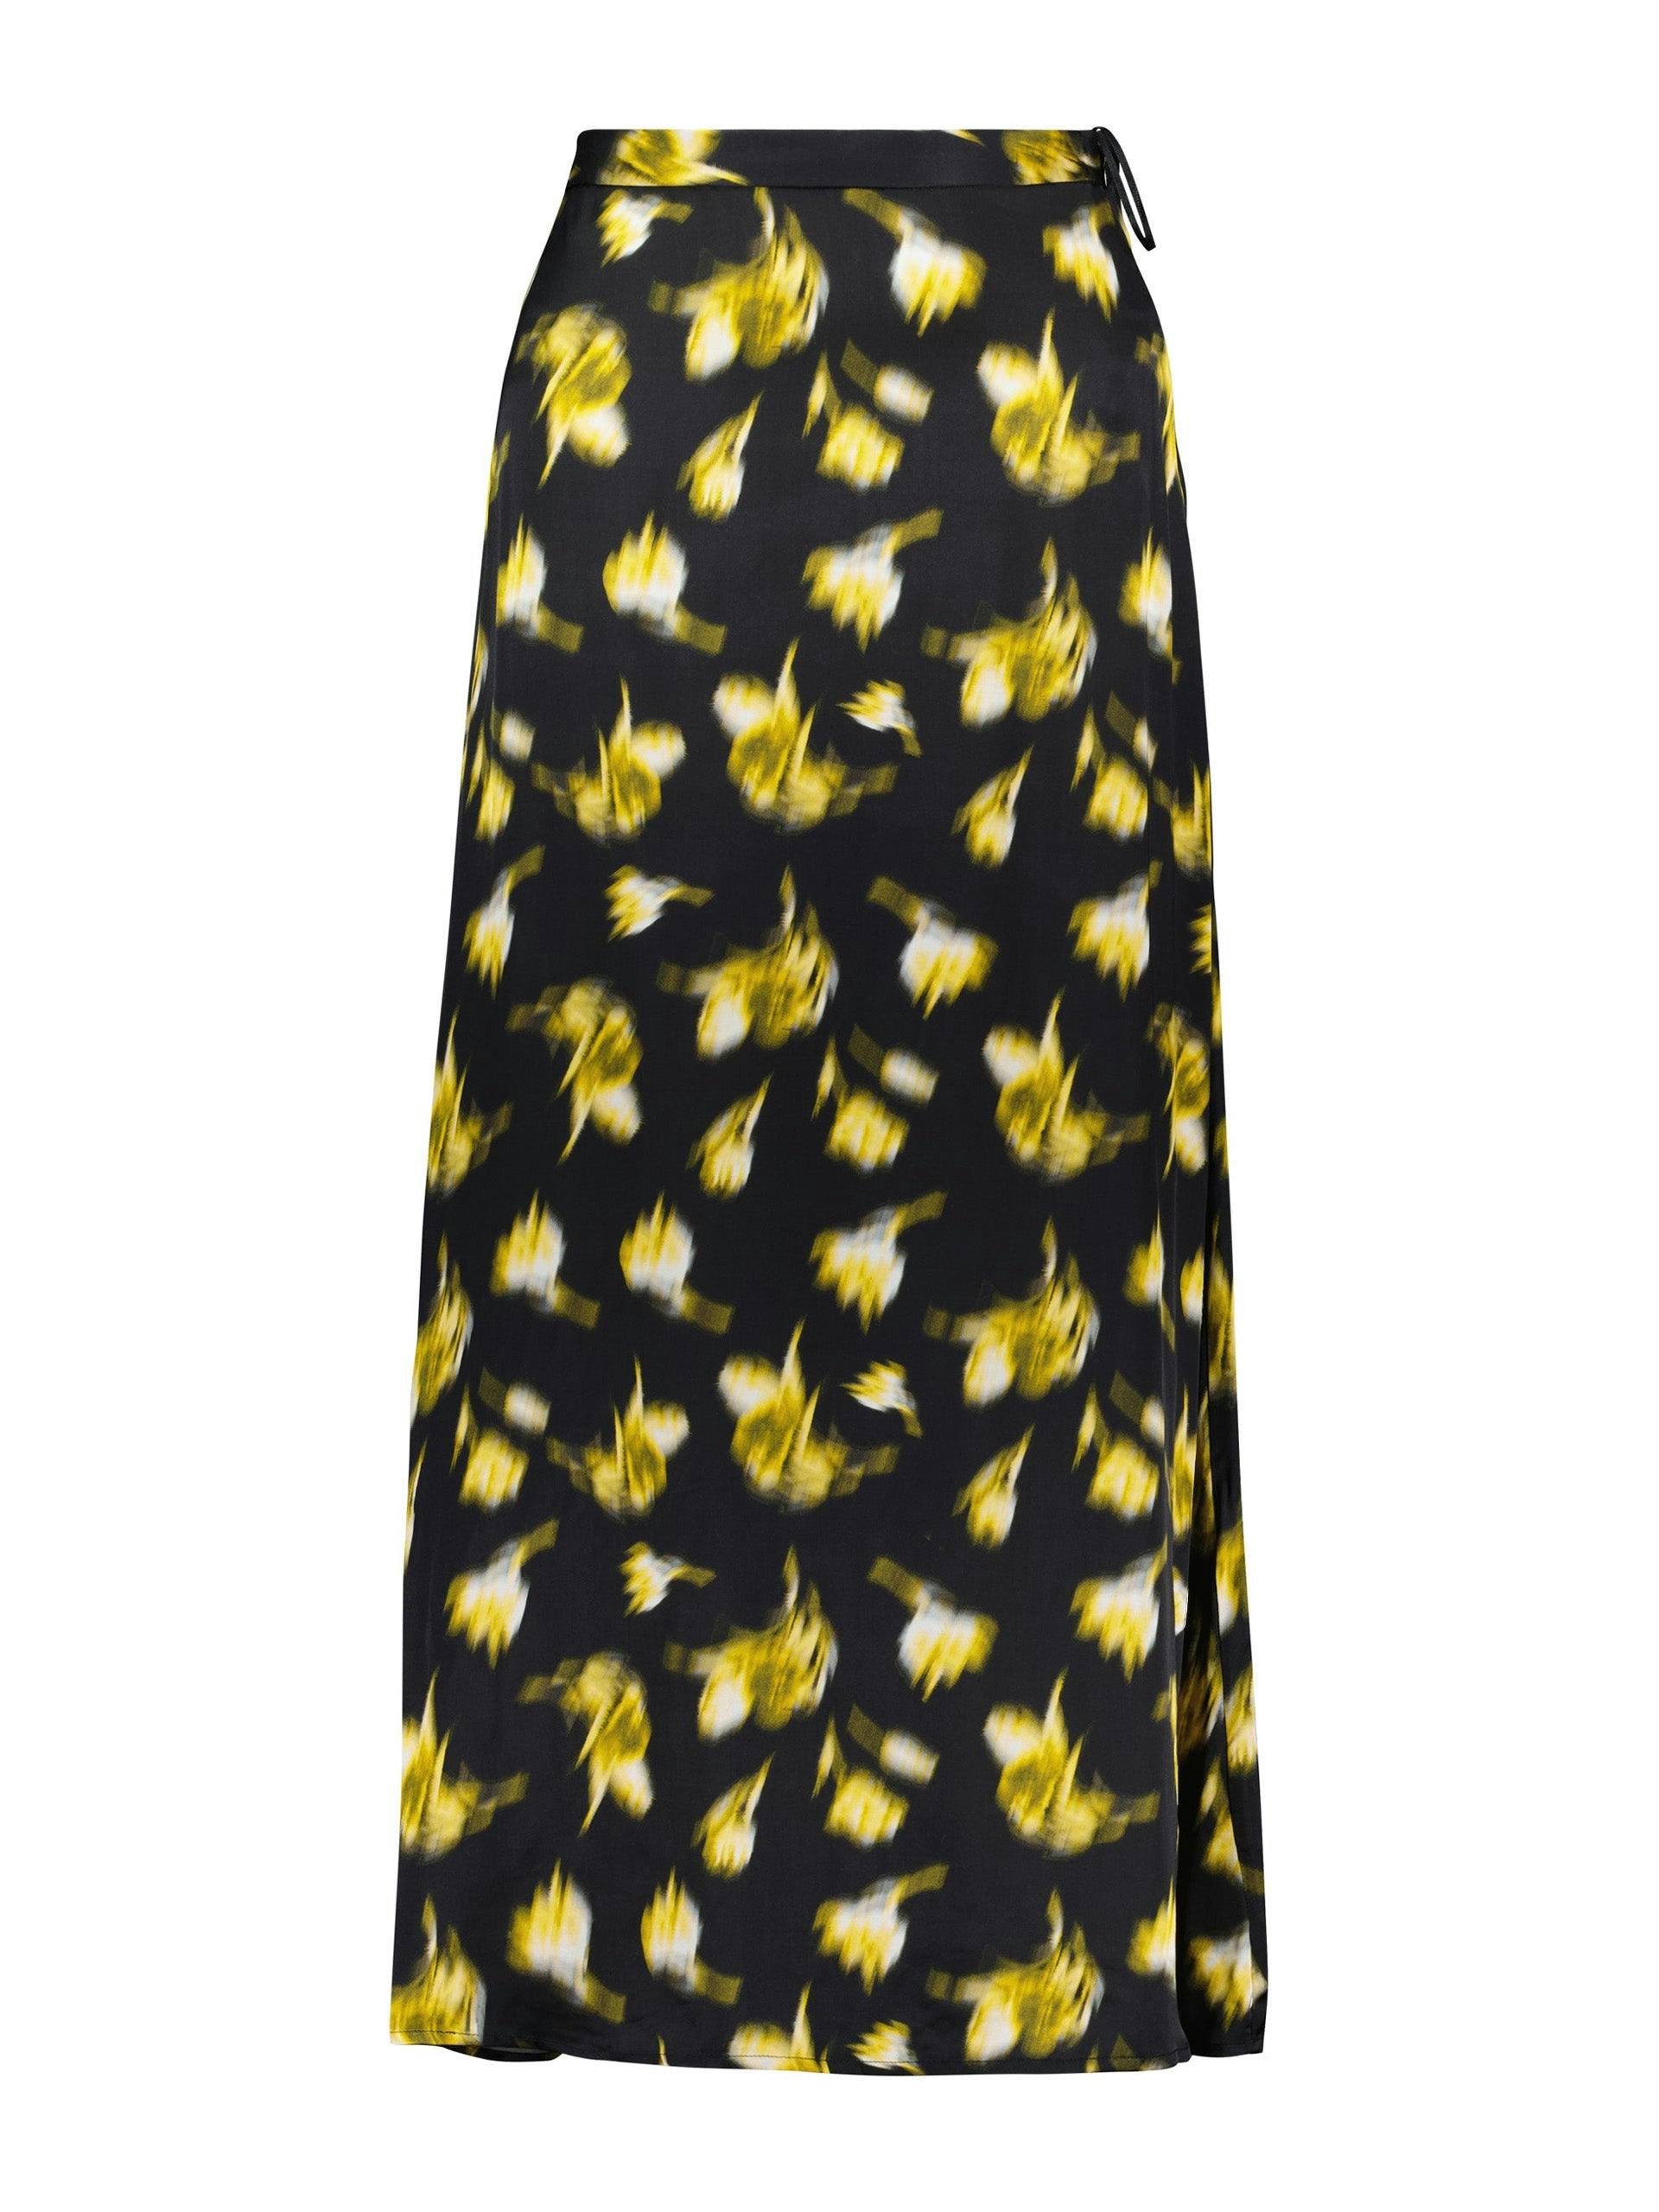 Doris floral skirt